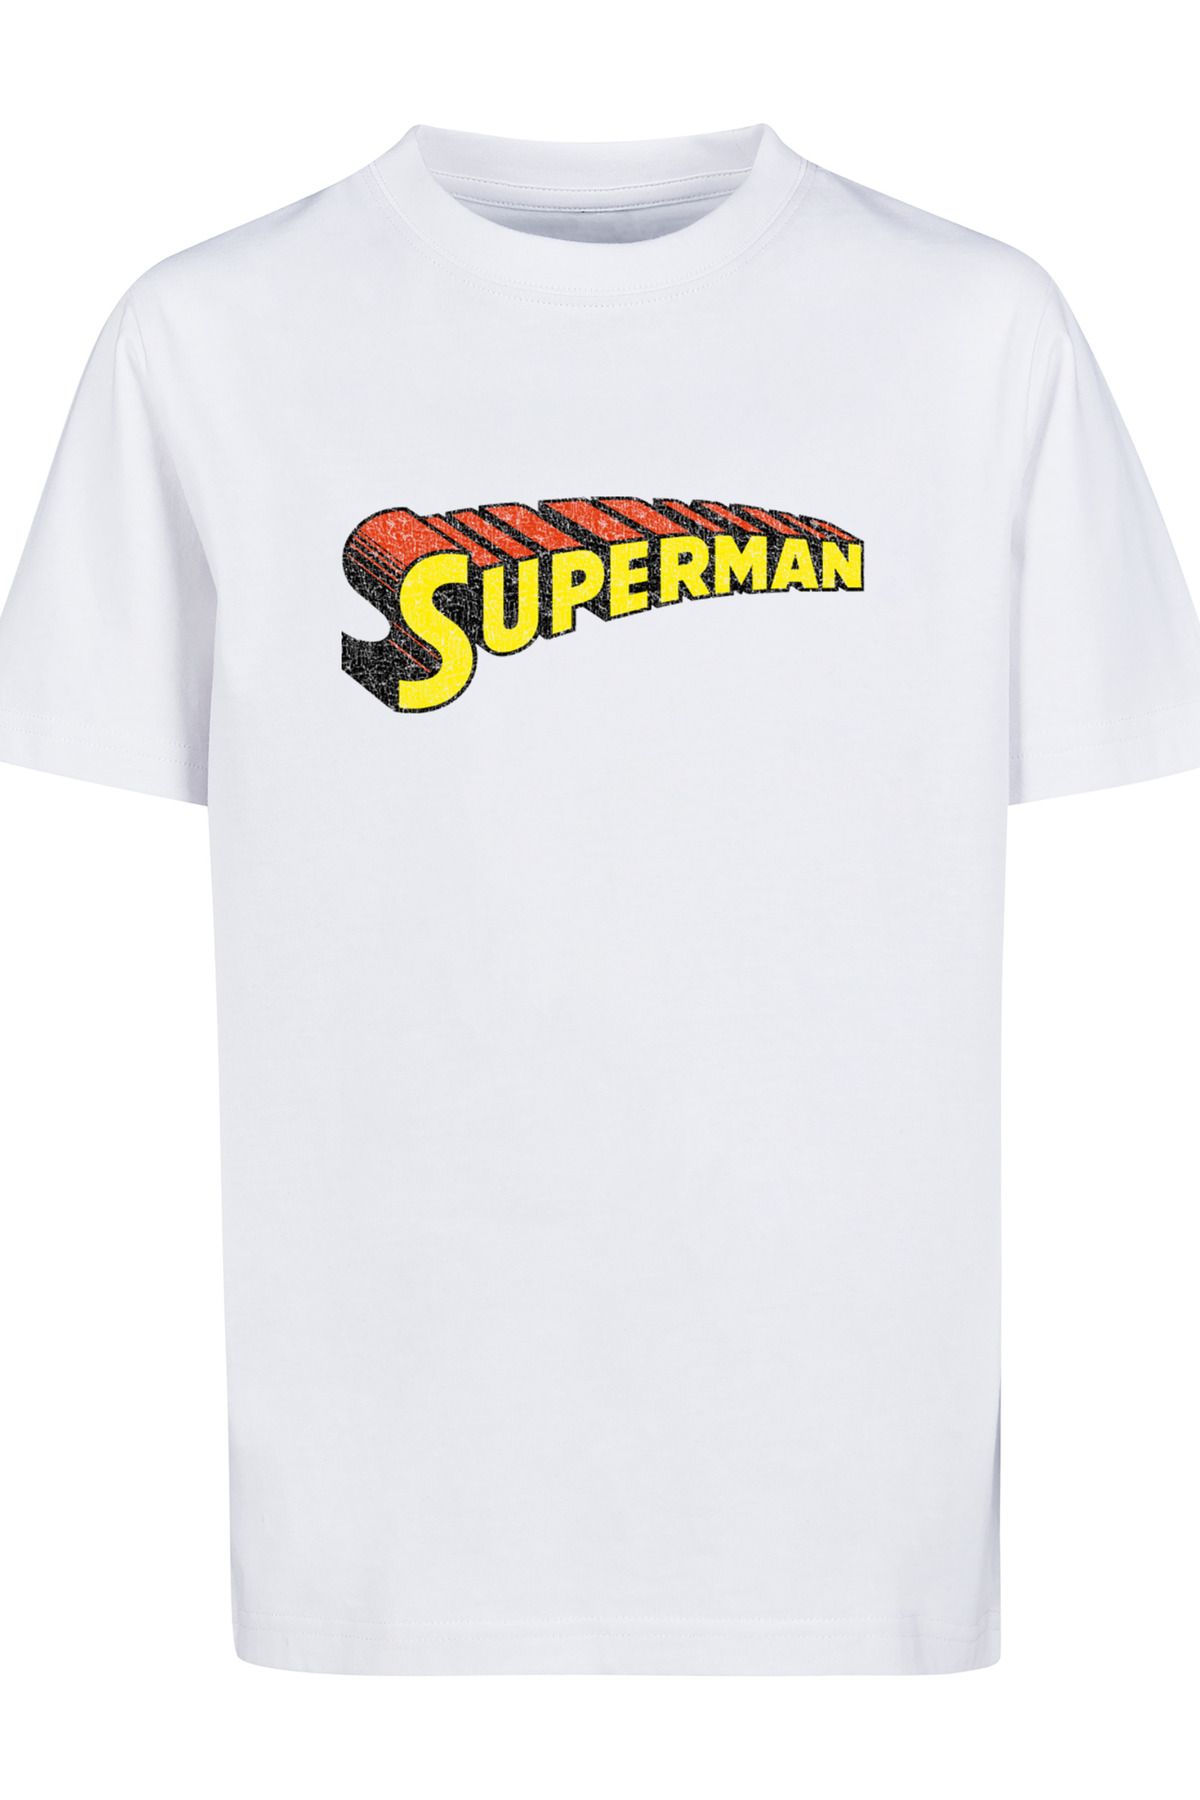 F4NT4STIC Kinder DC Comics Superman Kids Crackle mit Trendyol Telescopic Logo-WHT Basic T-Shirt 